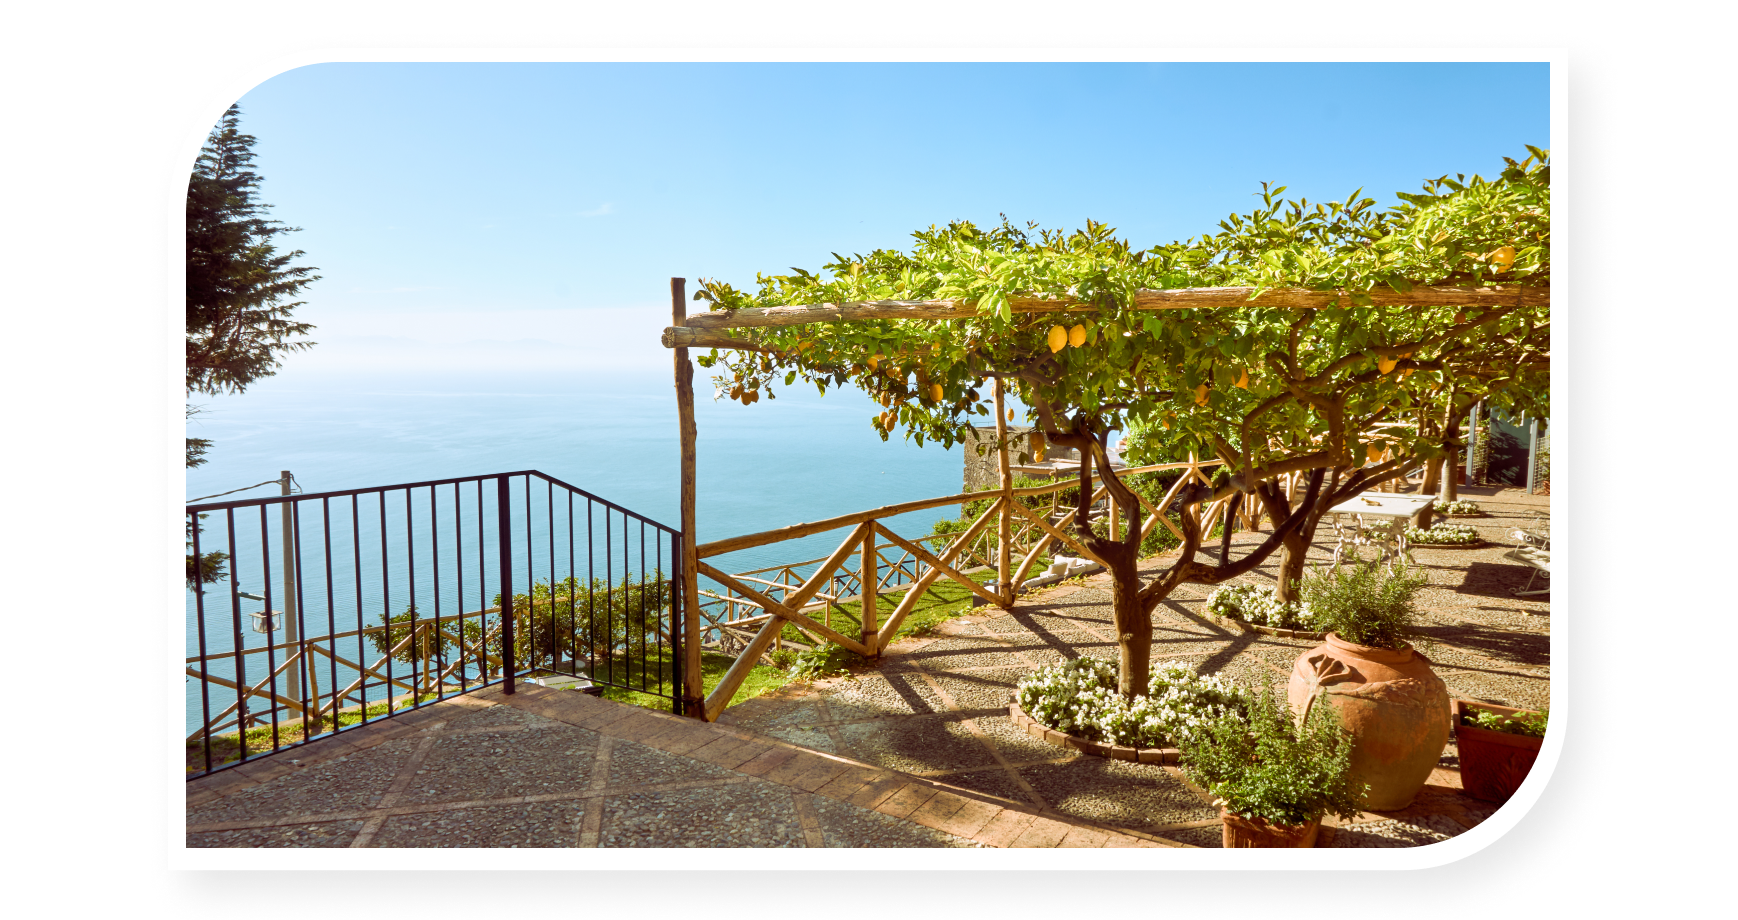 Lemon trees by the Amalfi Coast cliffs